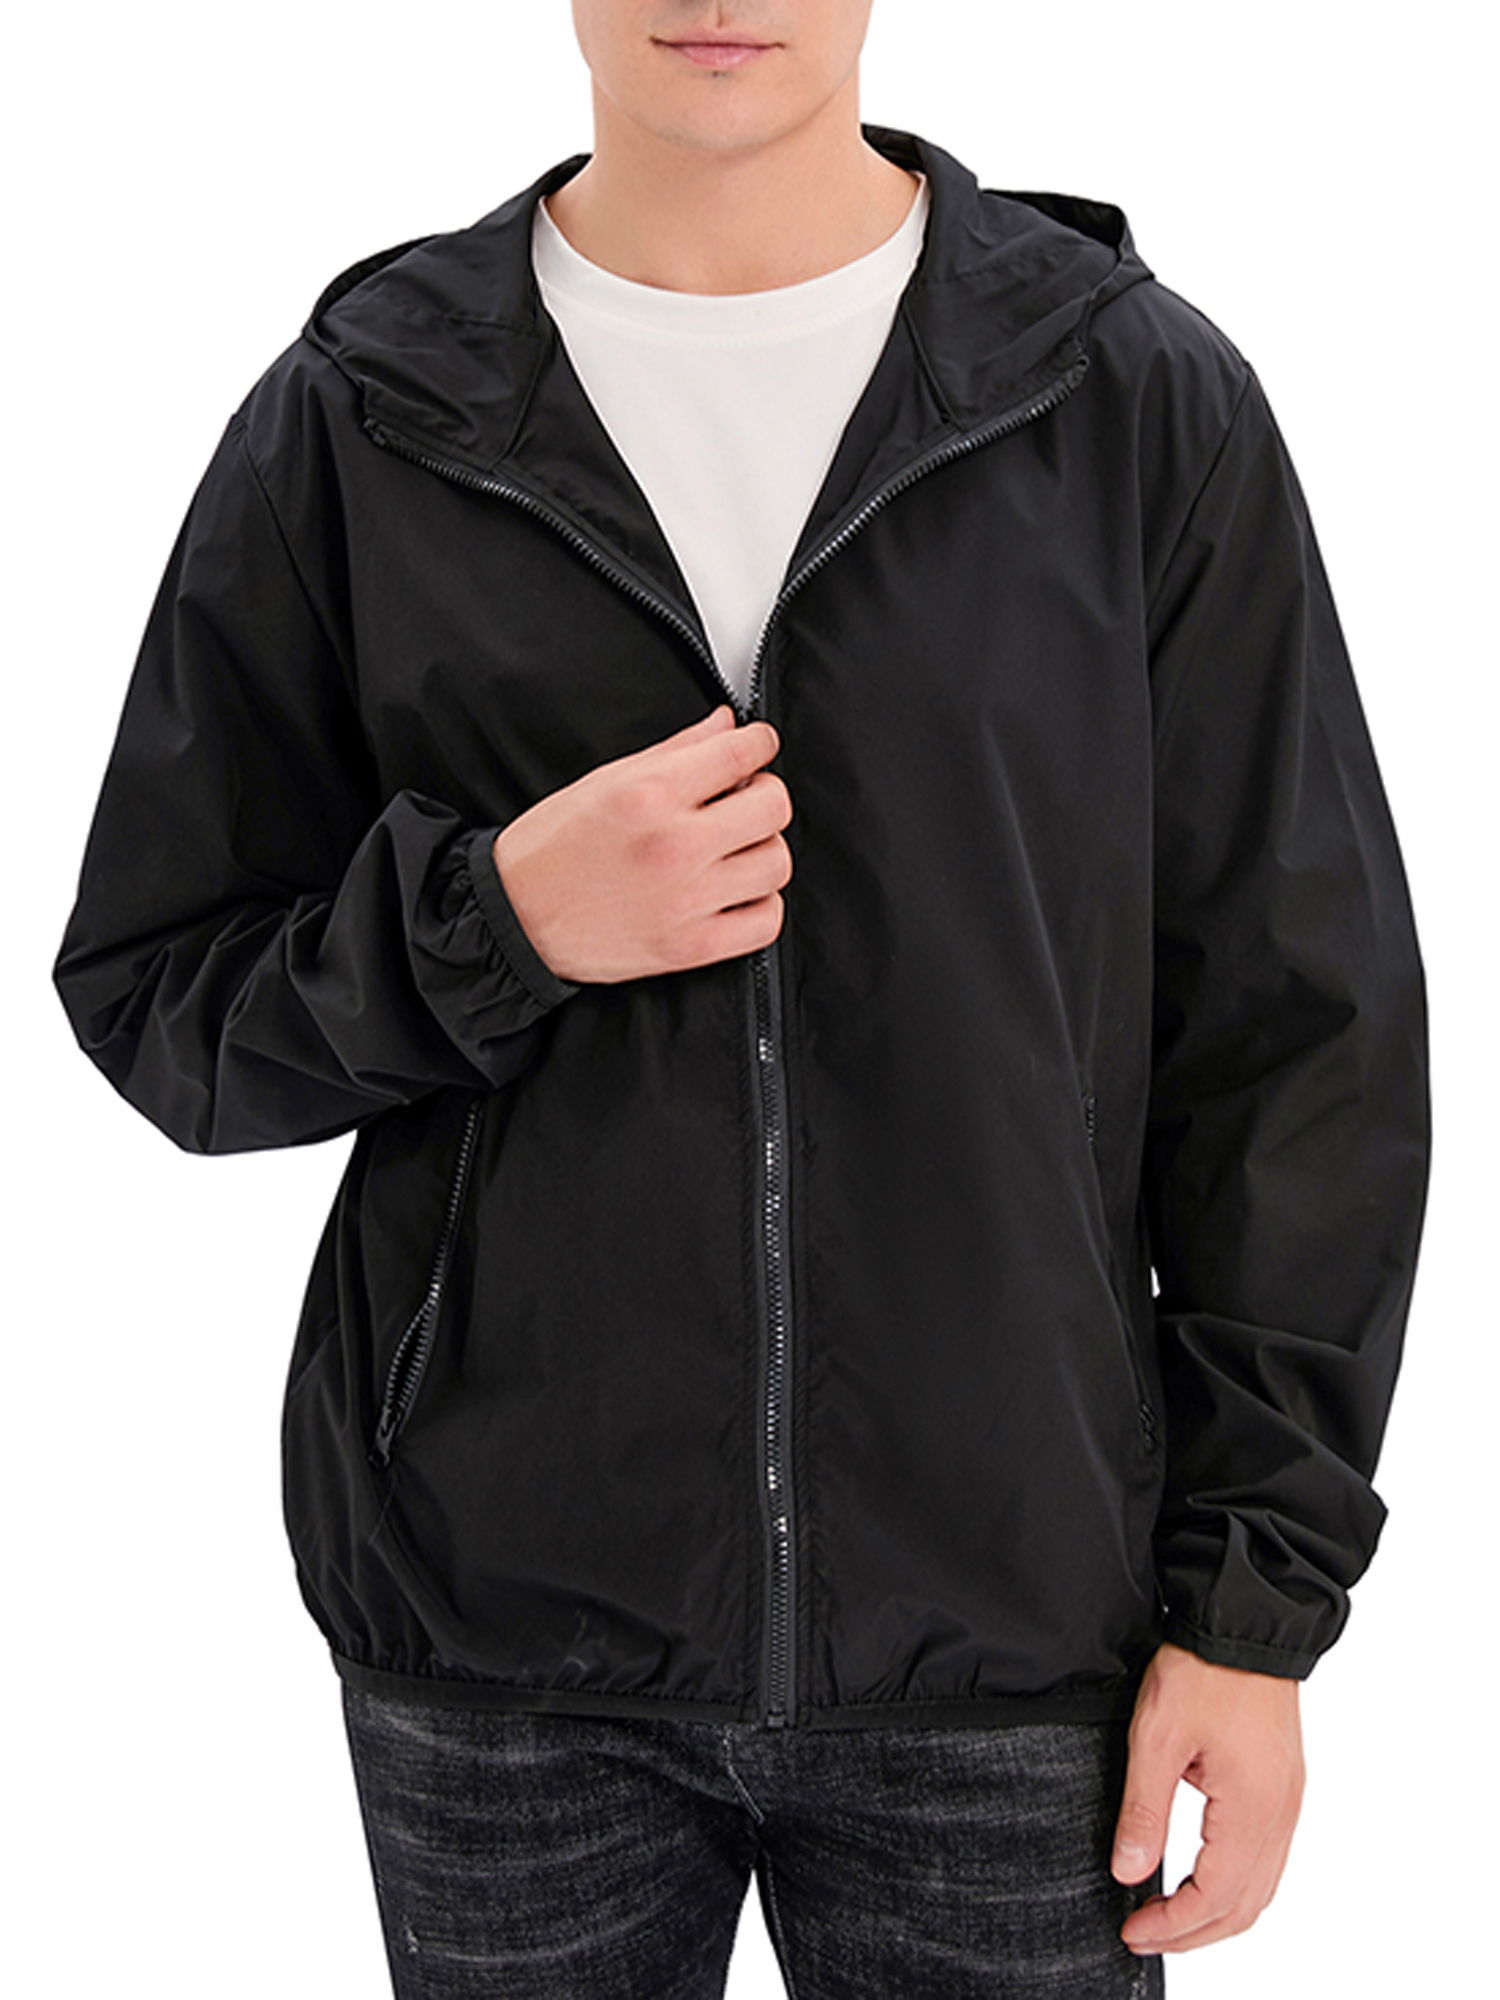 LELINTA Men's Big and Tall Outdoor Lightweight Windbreaker Jacket Hooded Waterproof Rain Jacket Drawstring Hooded Zip-Up Sport Windbreaker, up to Size 8XL, Black/ Grey - image 1 of 7